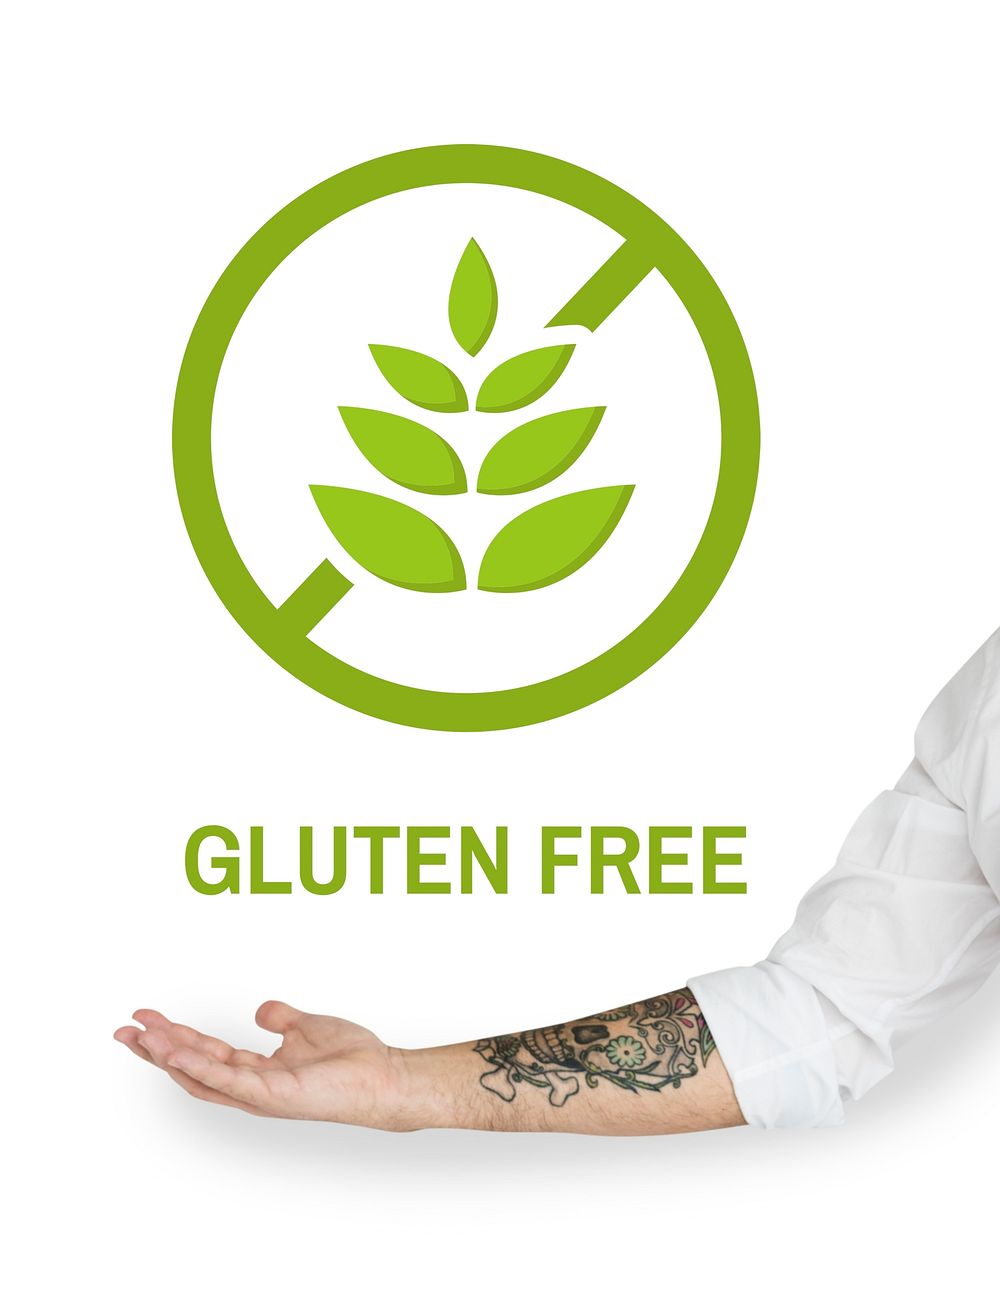 Gluten Free Healthy Lifestyle Concept